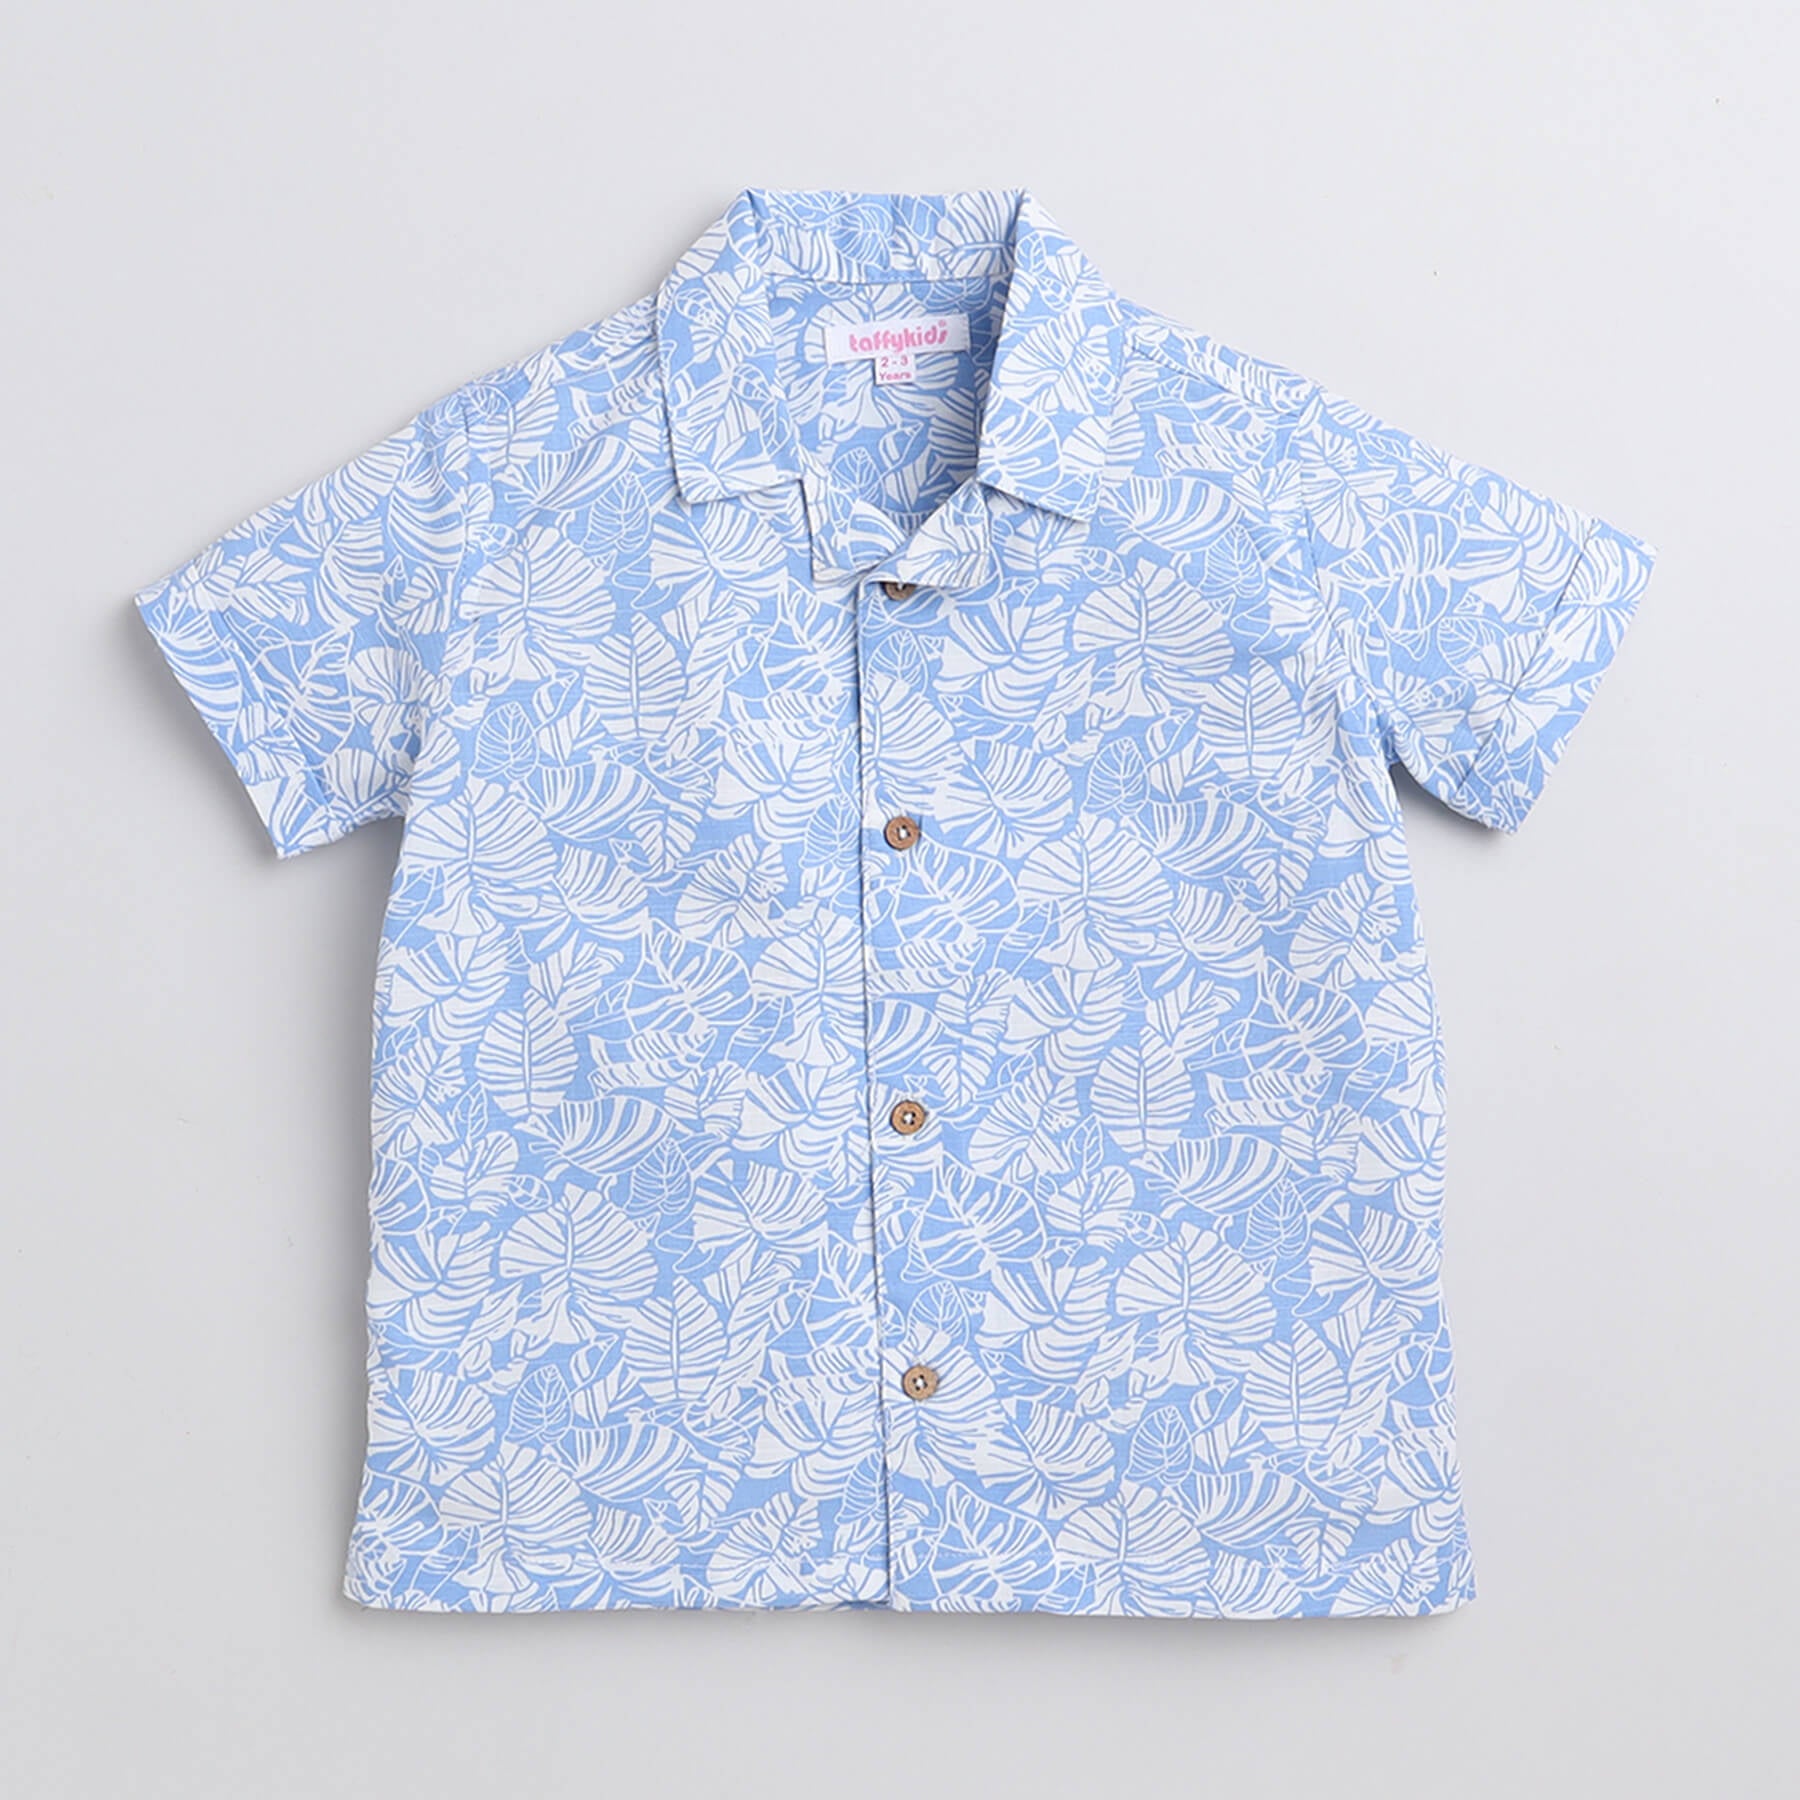 Taffykids tropical printed half sleeves shirt- White/blue